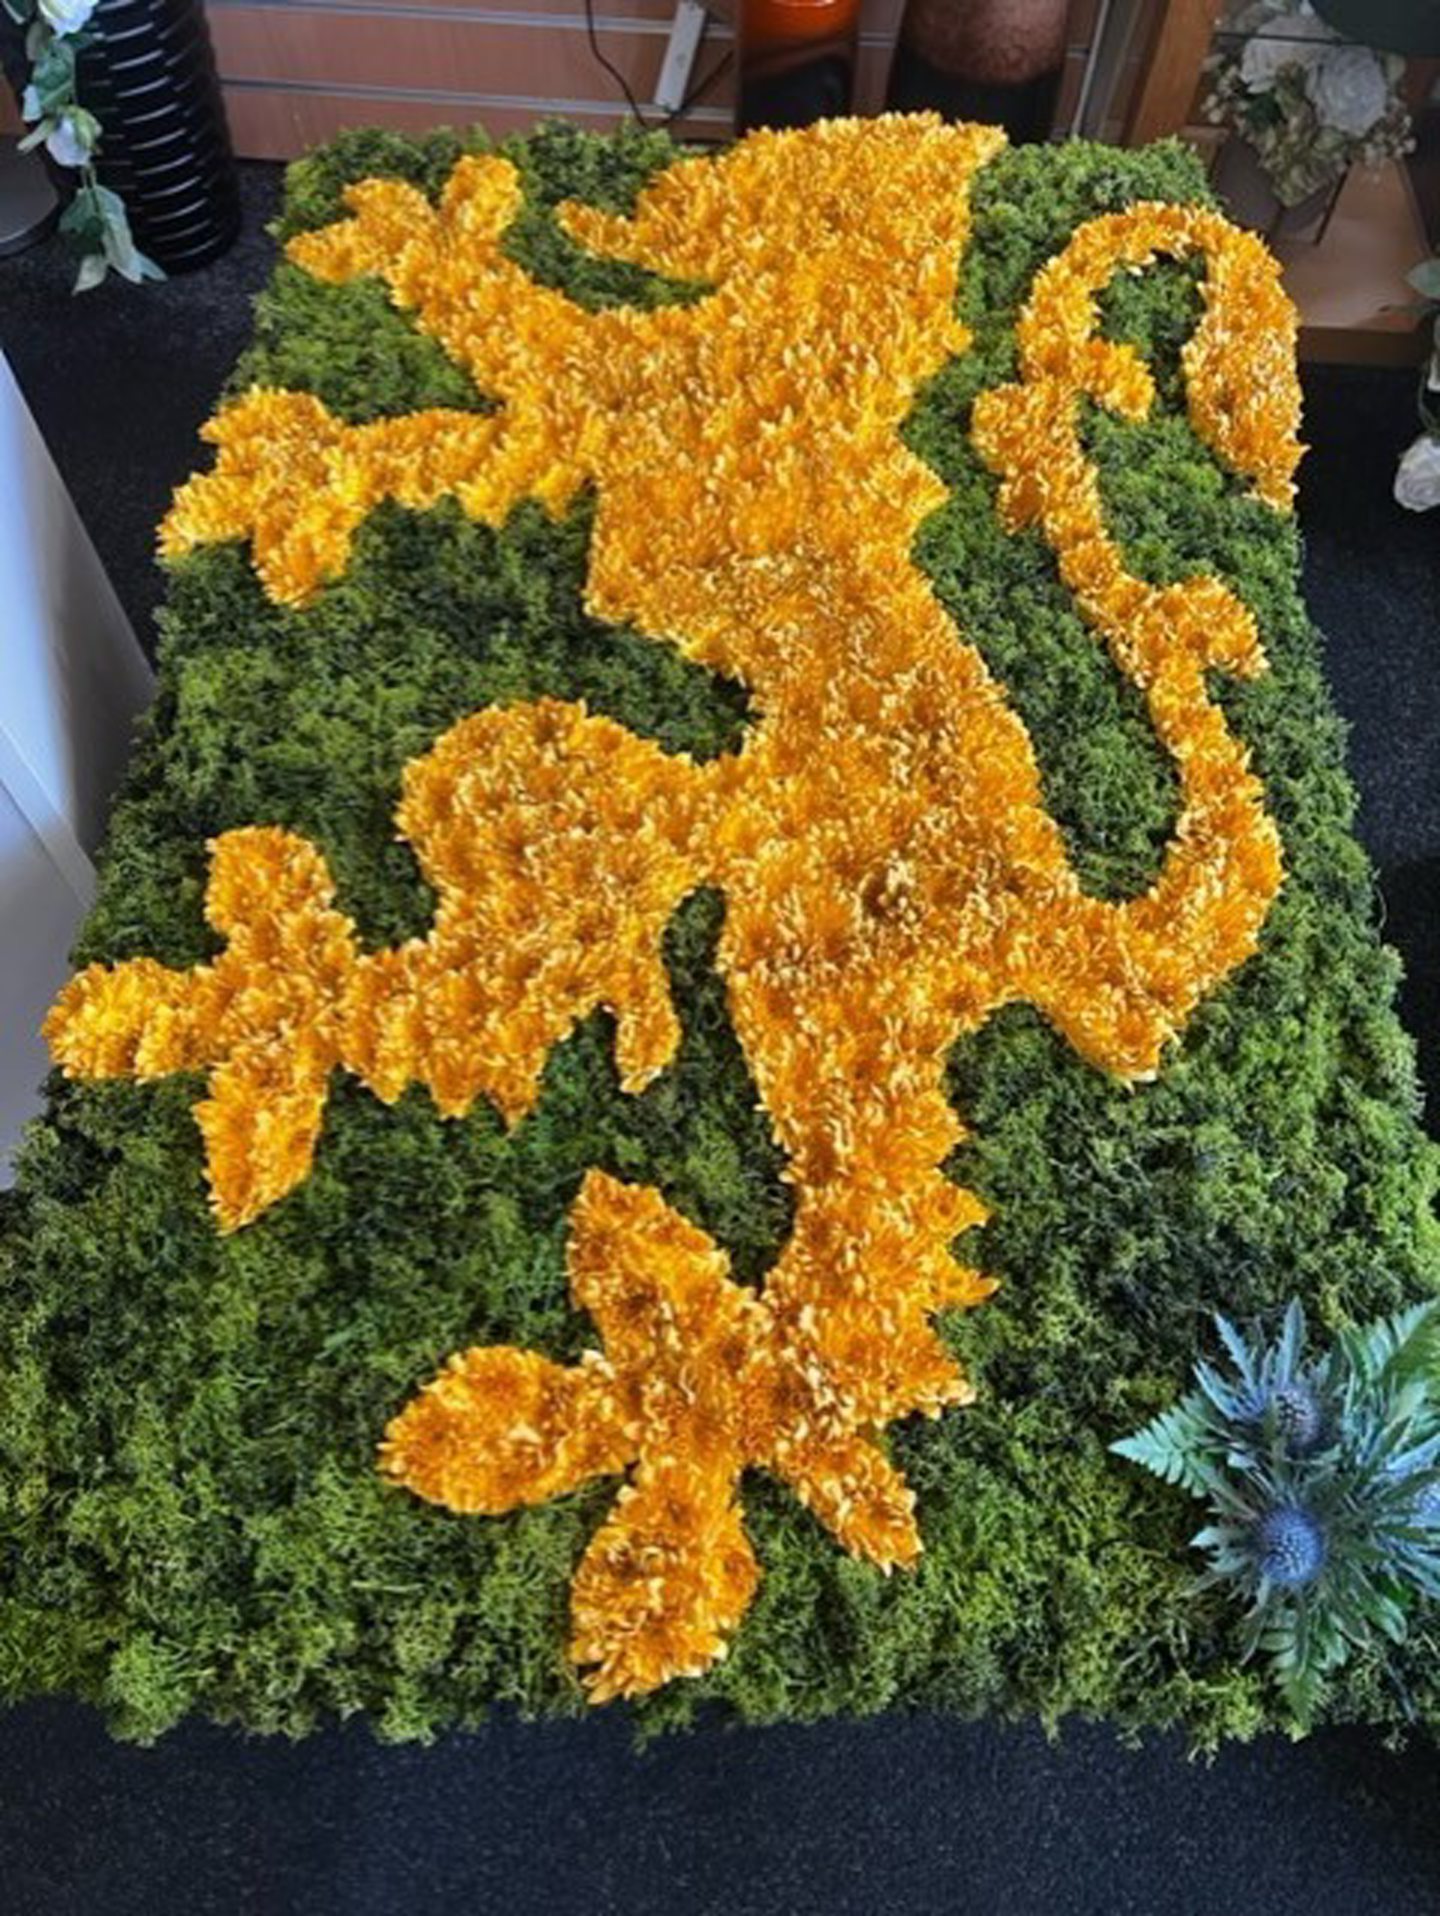 The Golden Lion floral tribute